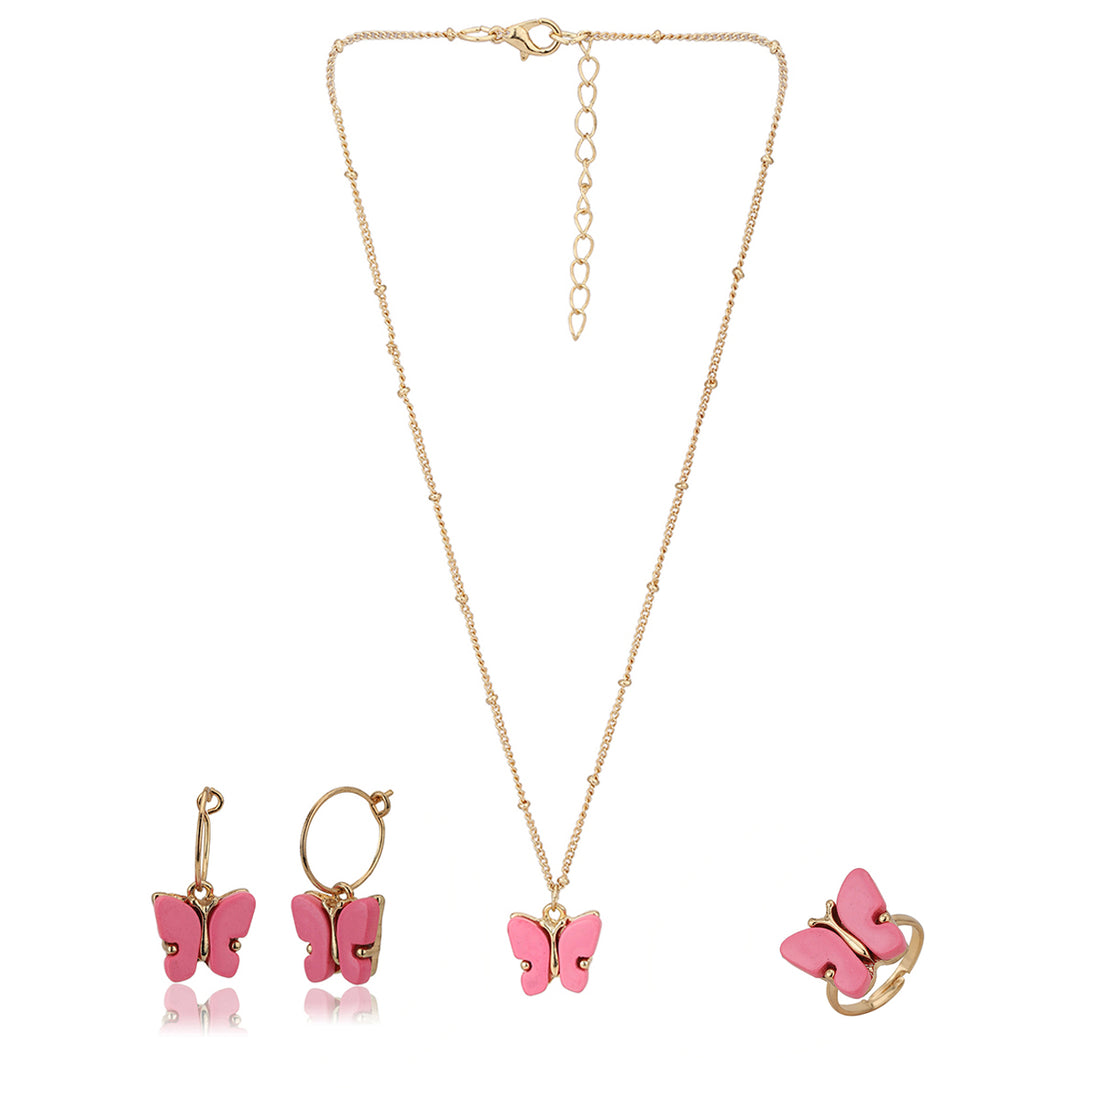 Carlton London Girls Gold-Plated Pink Jewellery Set Kjs045